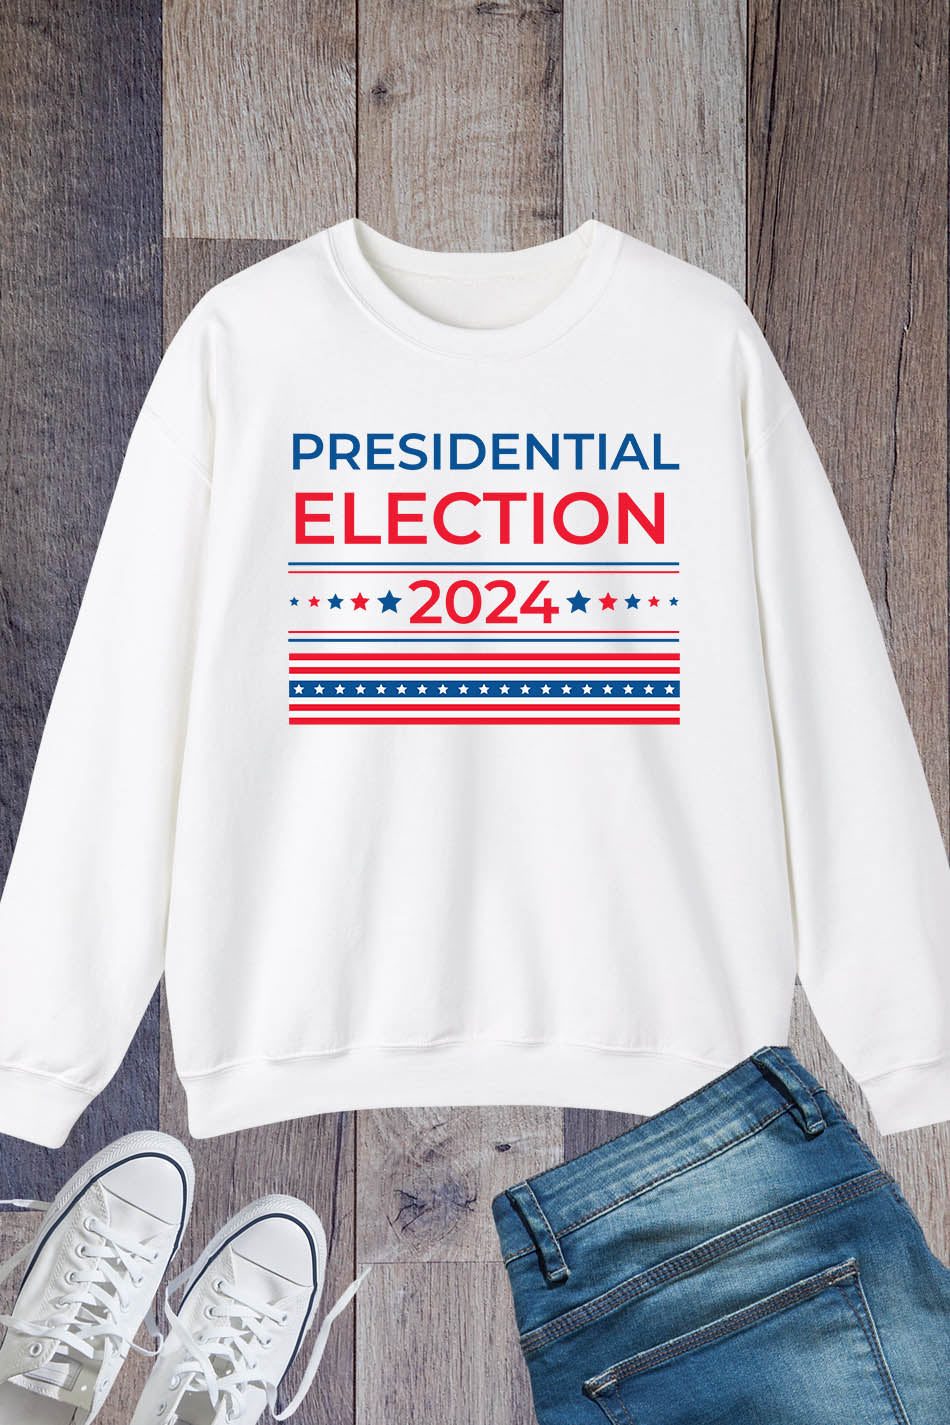 Vote Presidential Election 2024 USA Sweatshirt